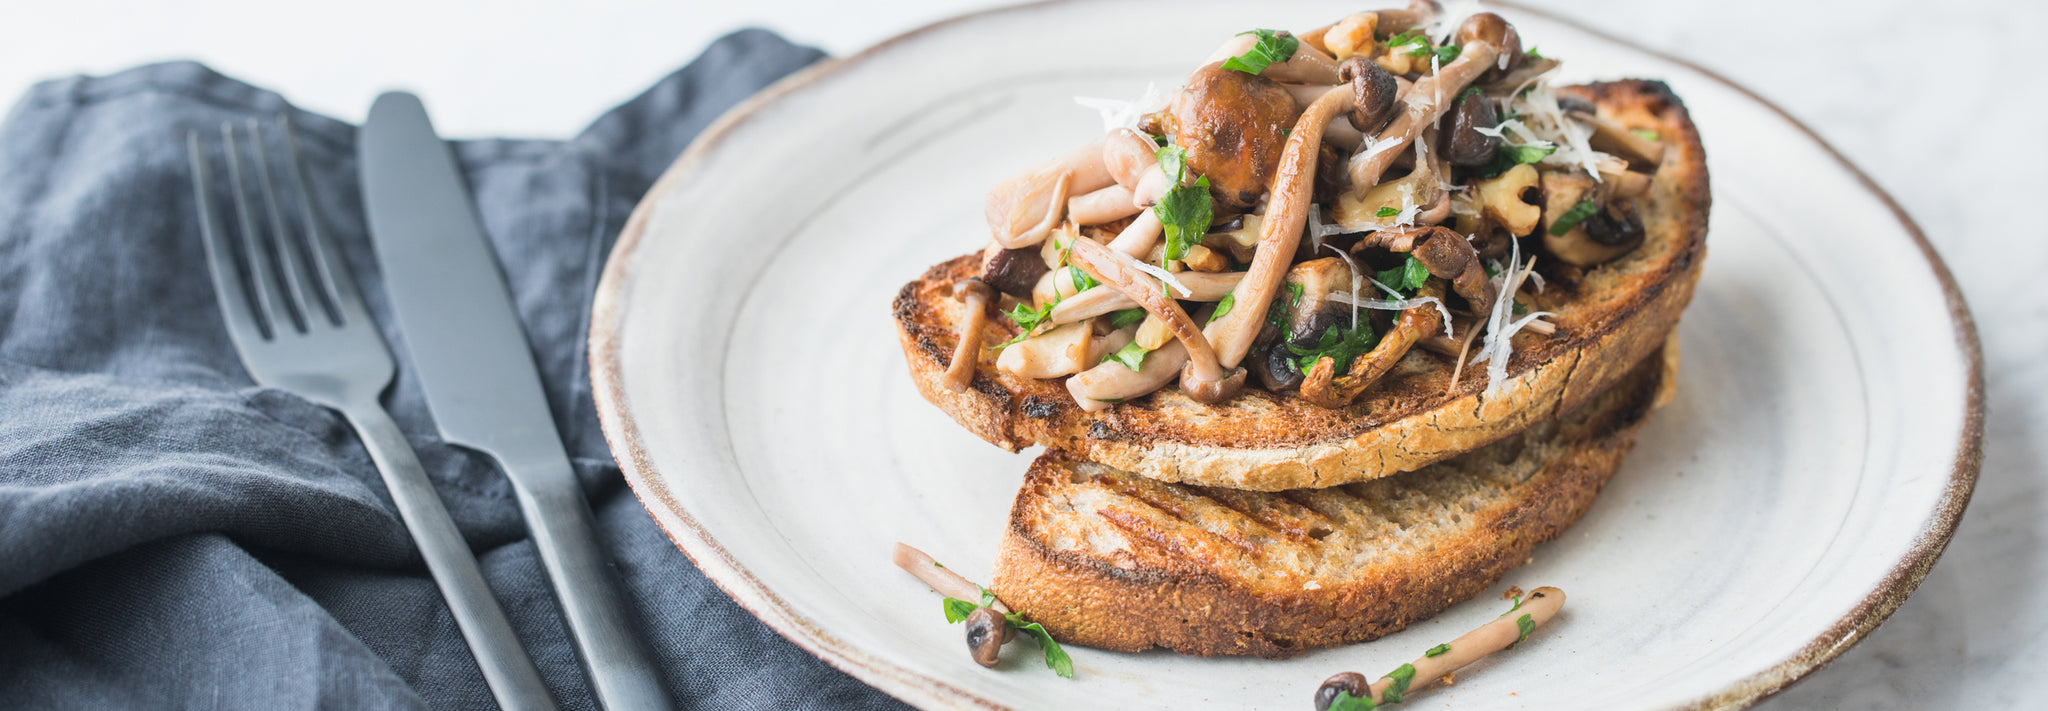 Wild Mushrooms and Walnuts on Toast - recipe - Gozney